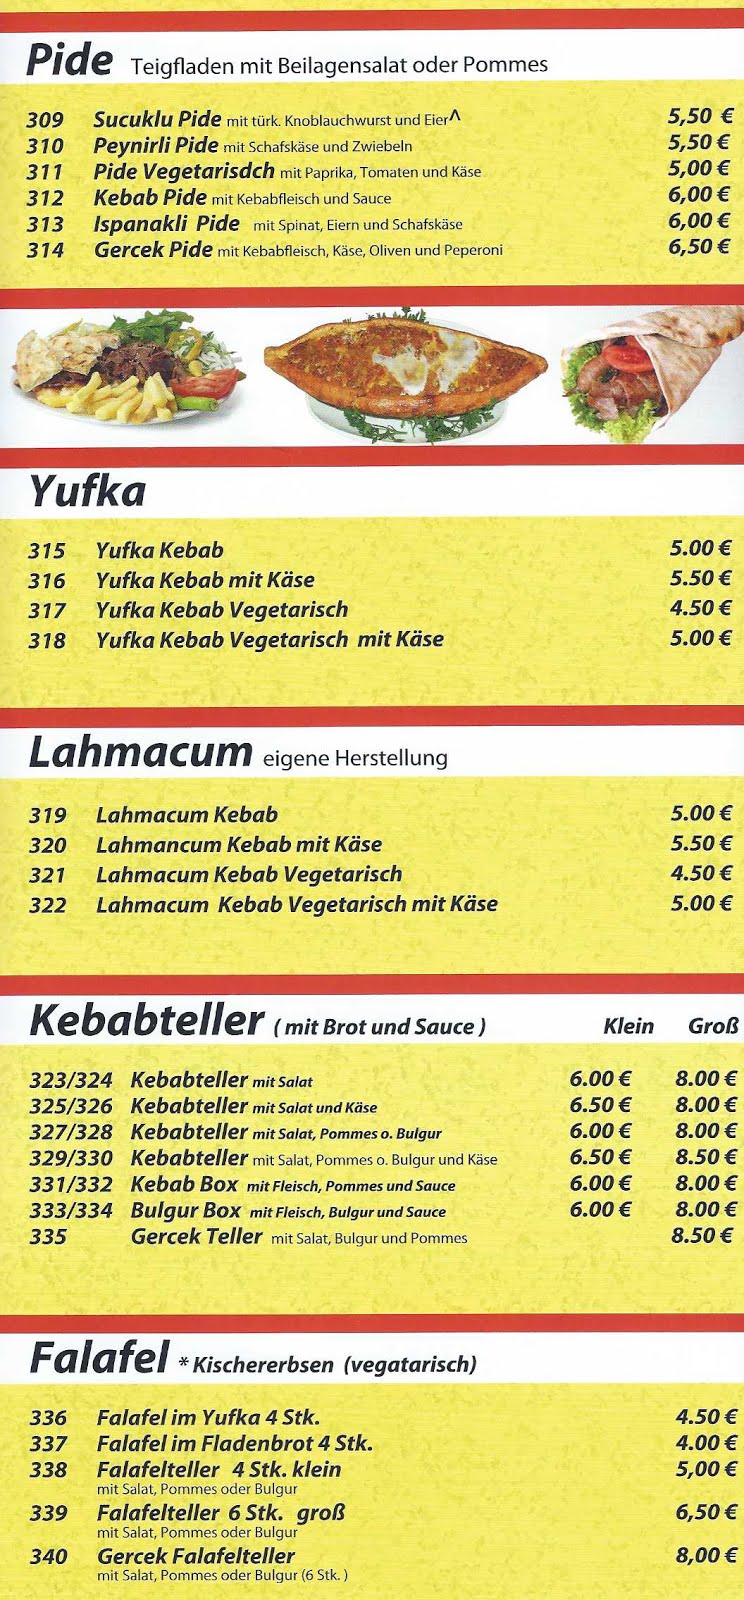 Pide - Yufka - Lahmacum - Kebabteller - Falafel